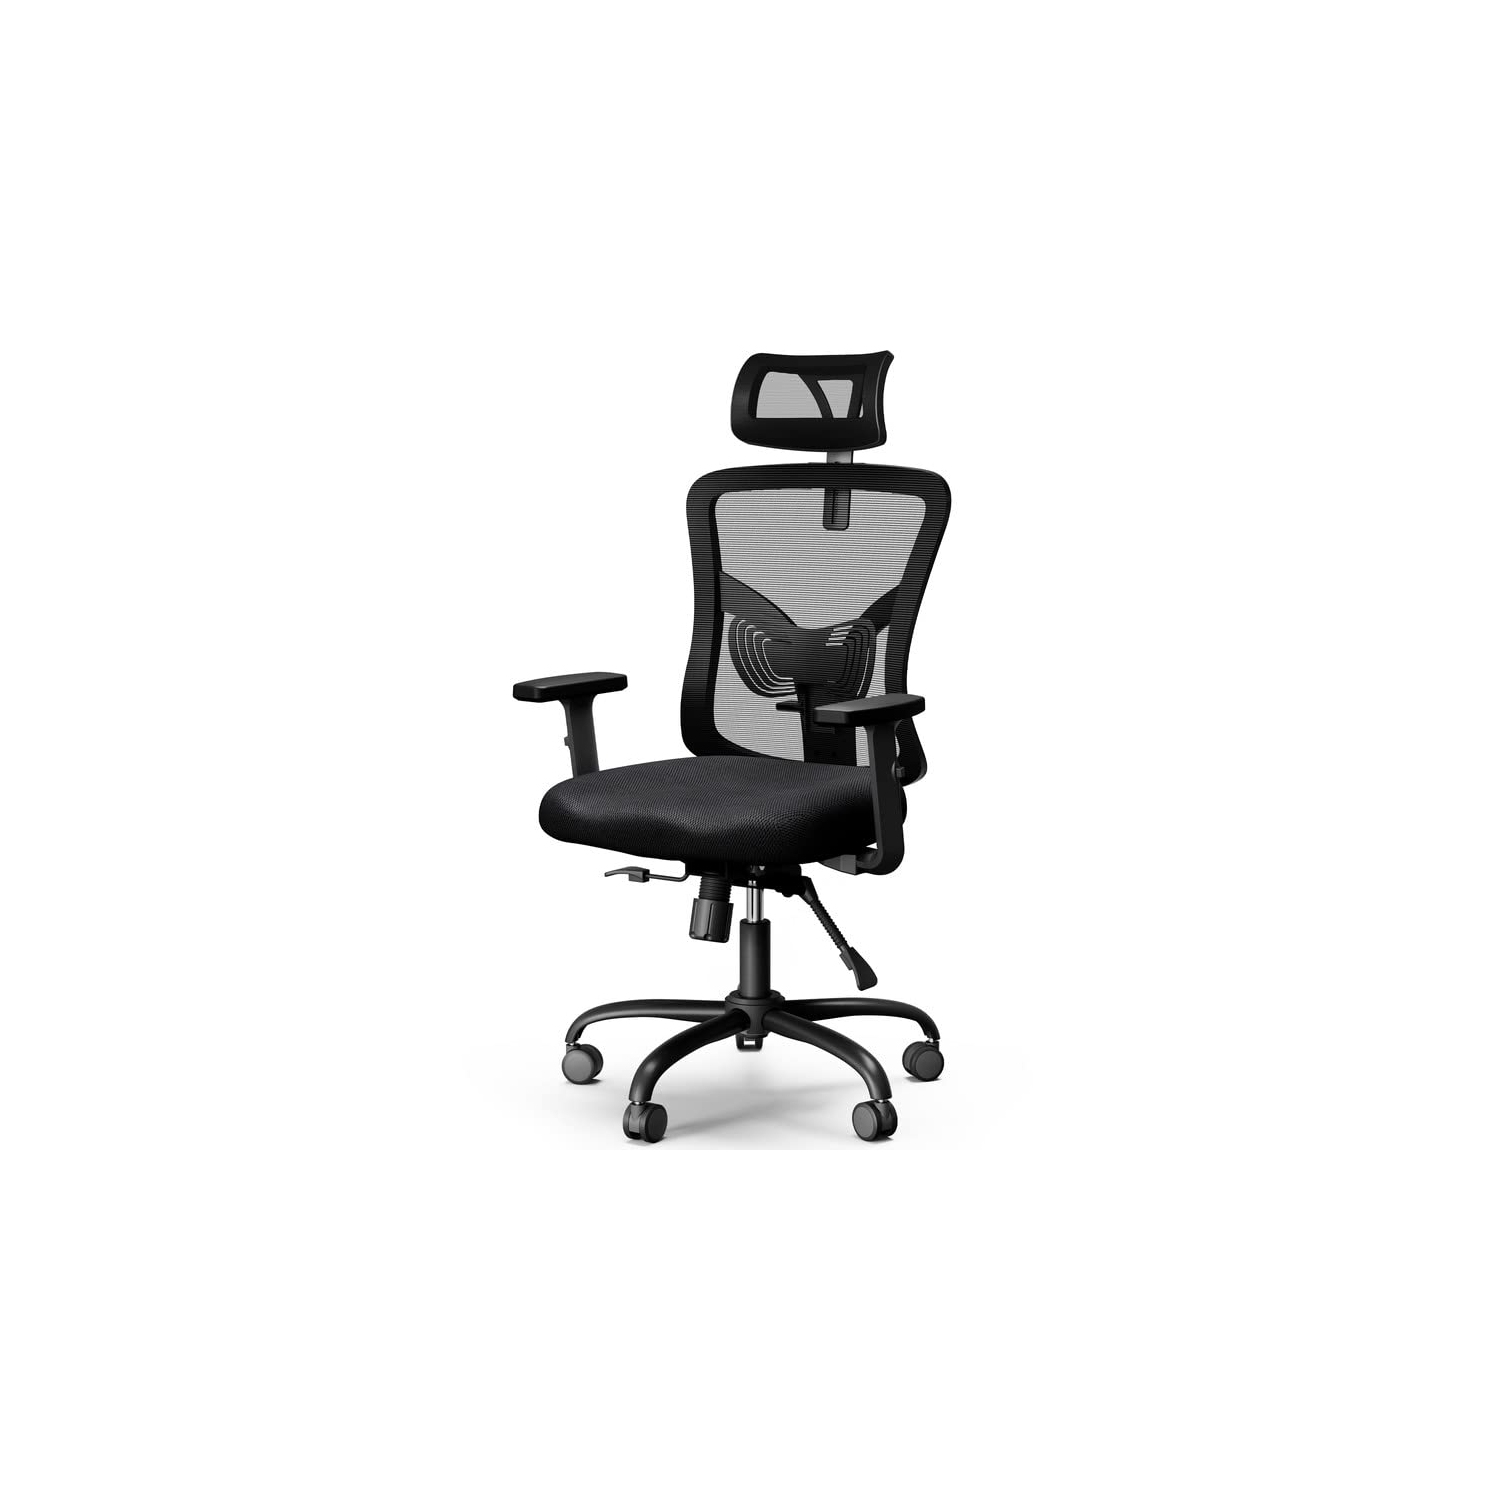 Huanuo Ergonomic Office Computer Chair with High Mesh Back, Adjustable Armrest, Lumbar Support & Headrest - Black